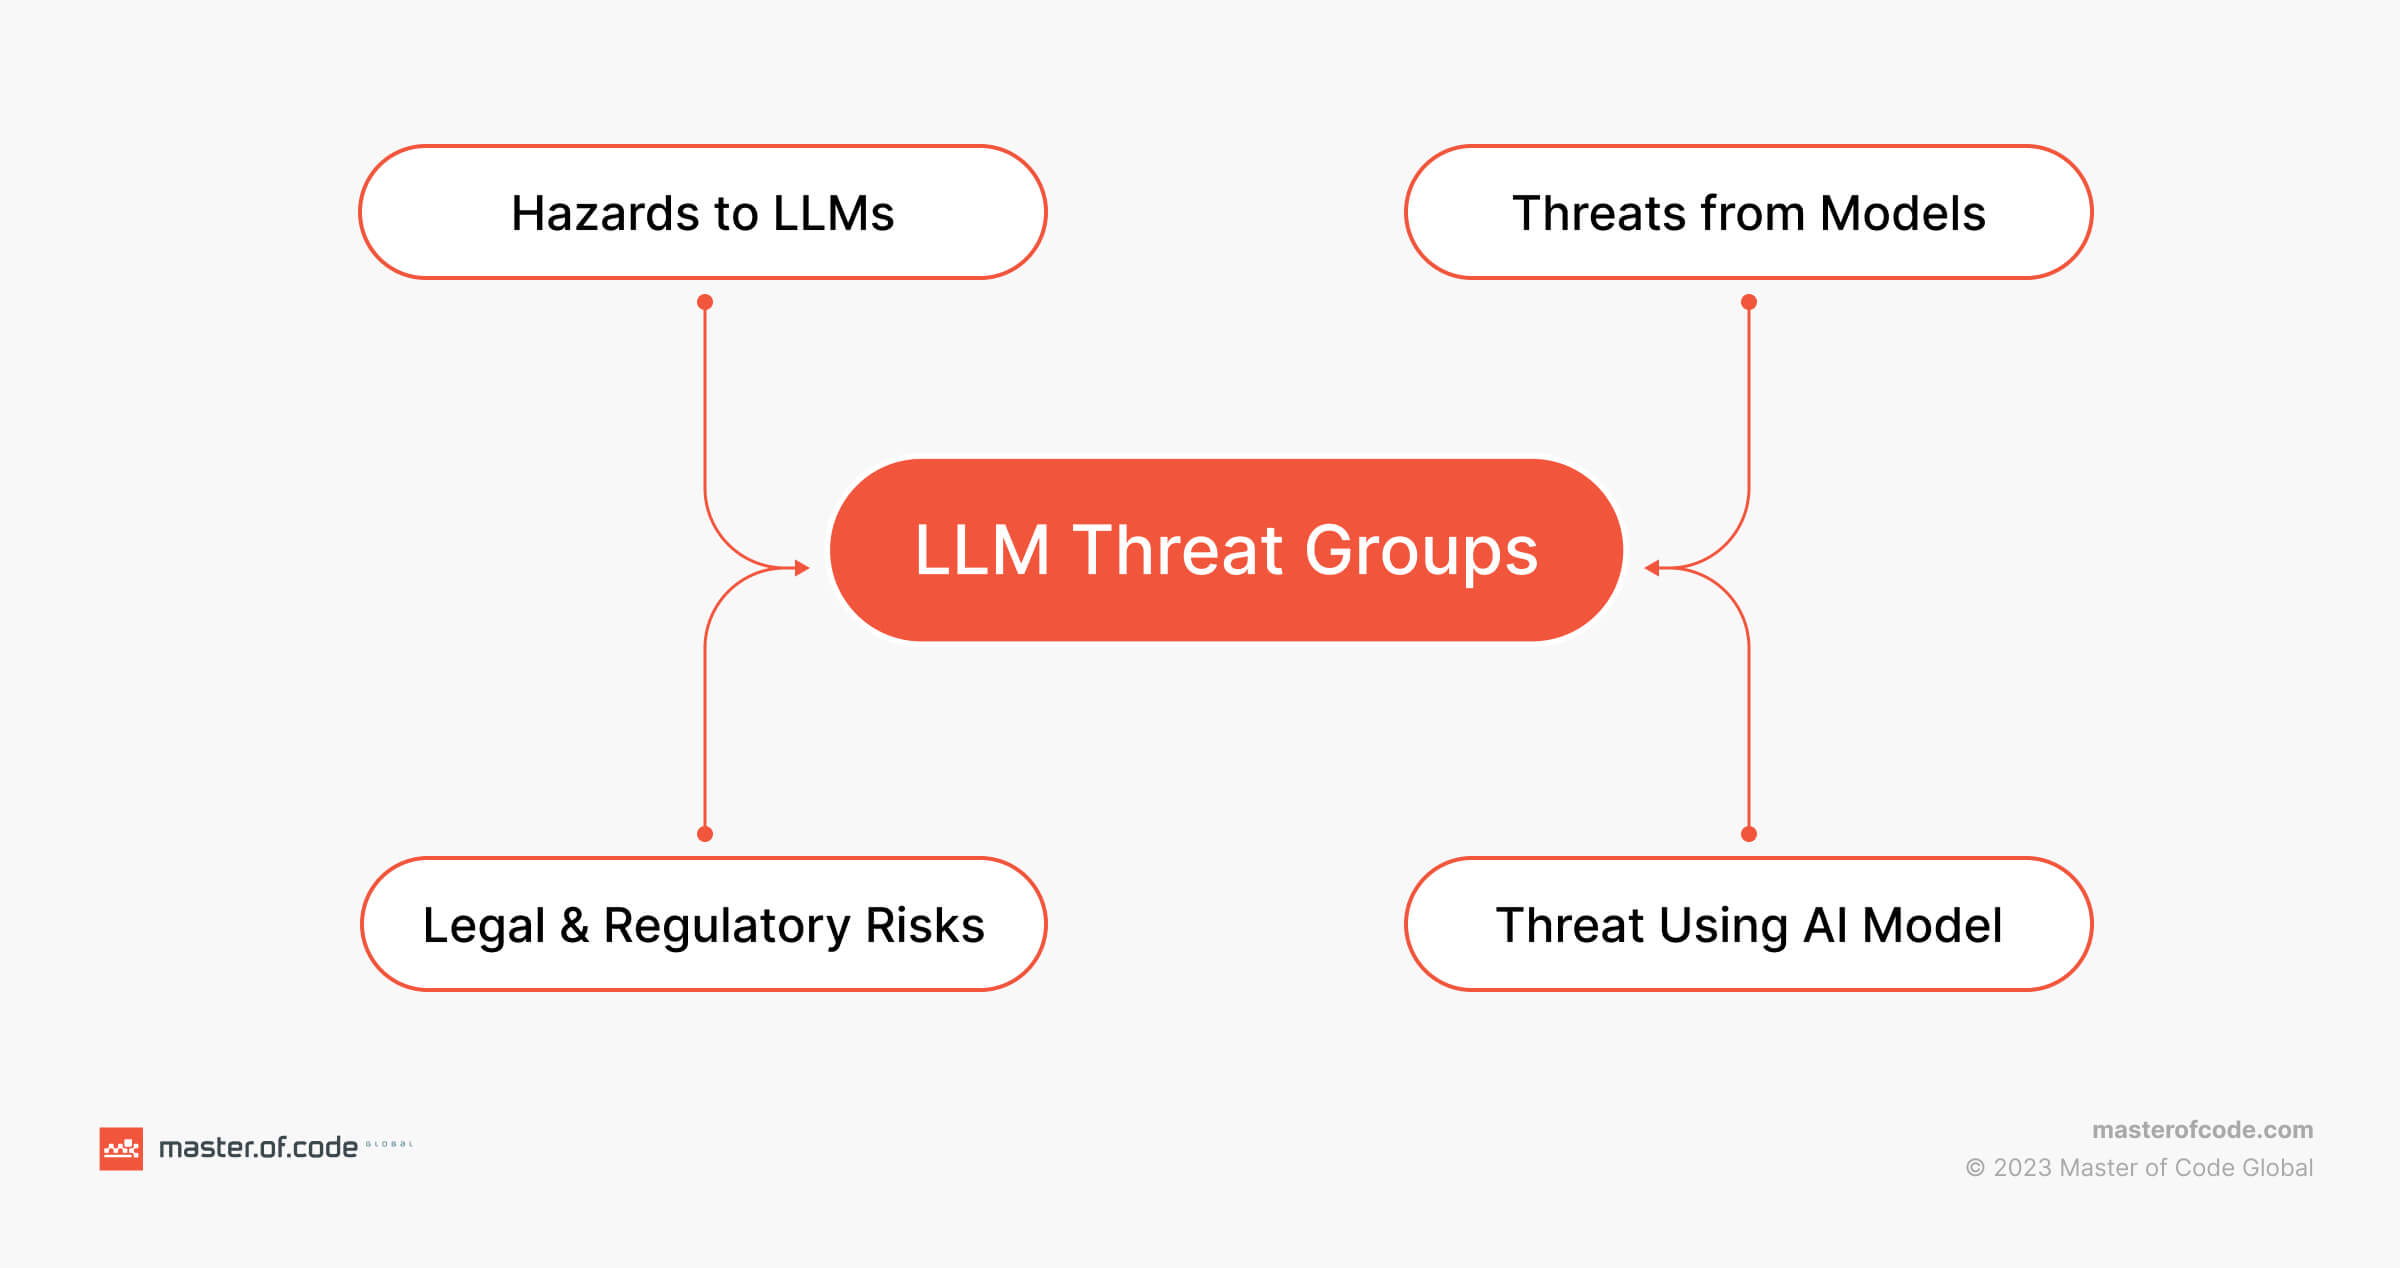 LLM threats map